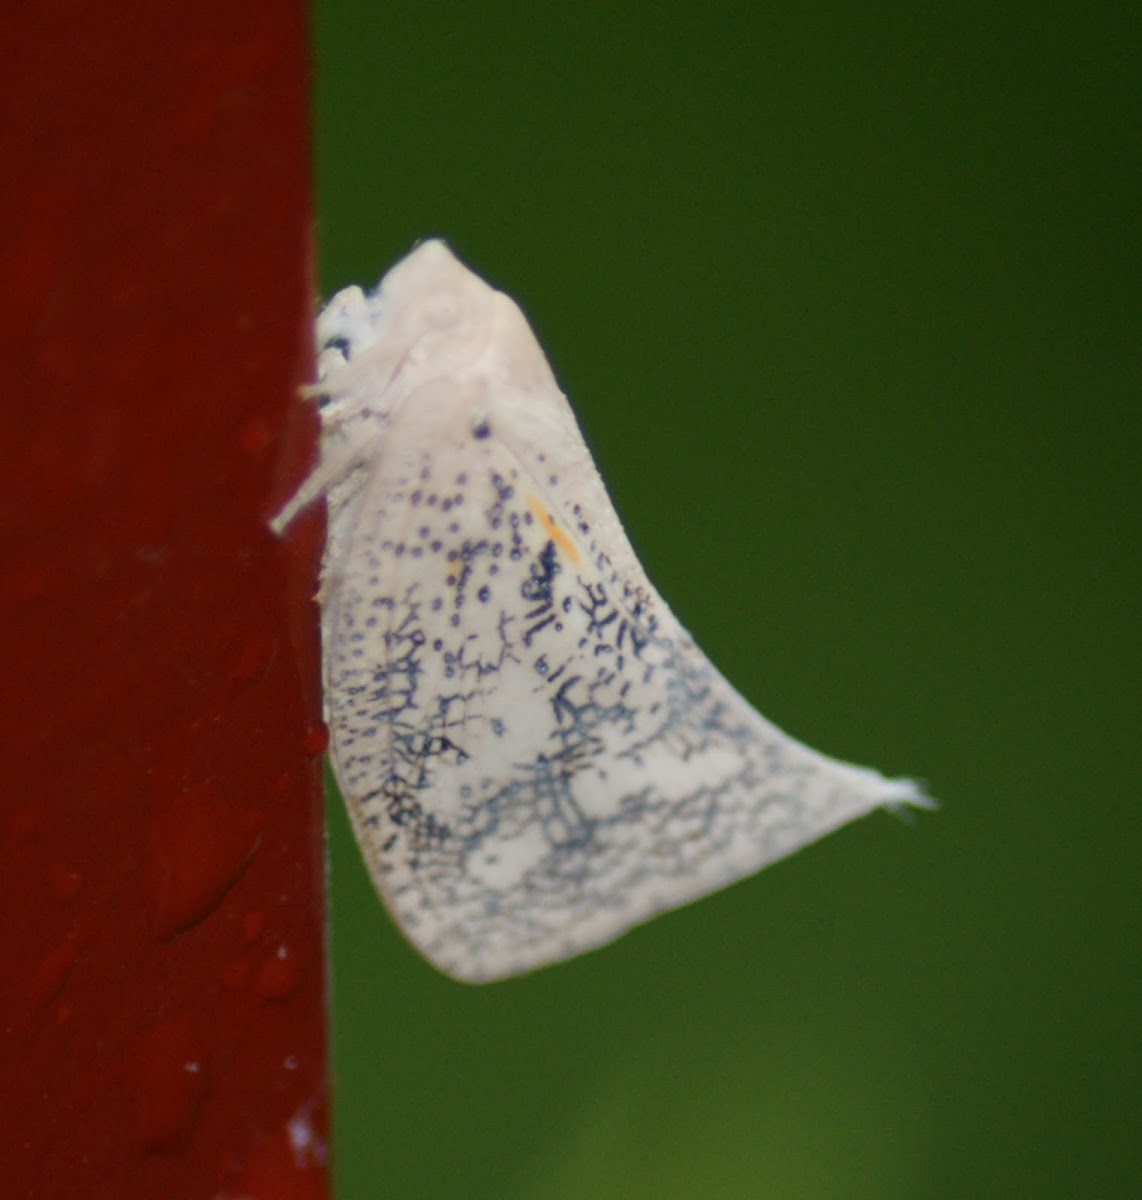 Flatid Planthopper